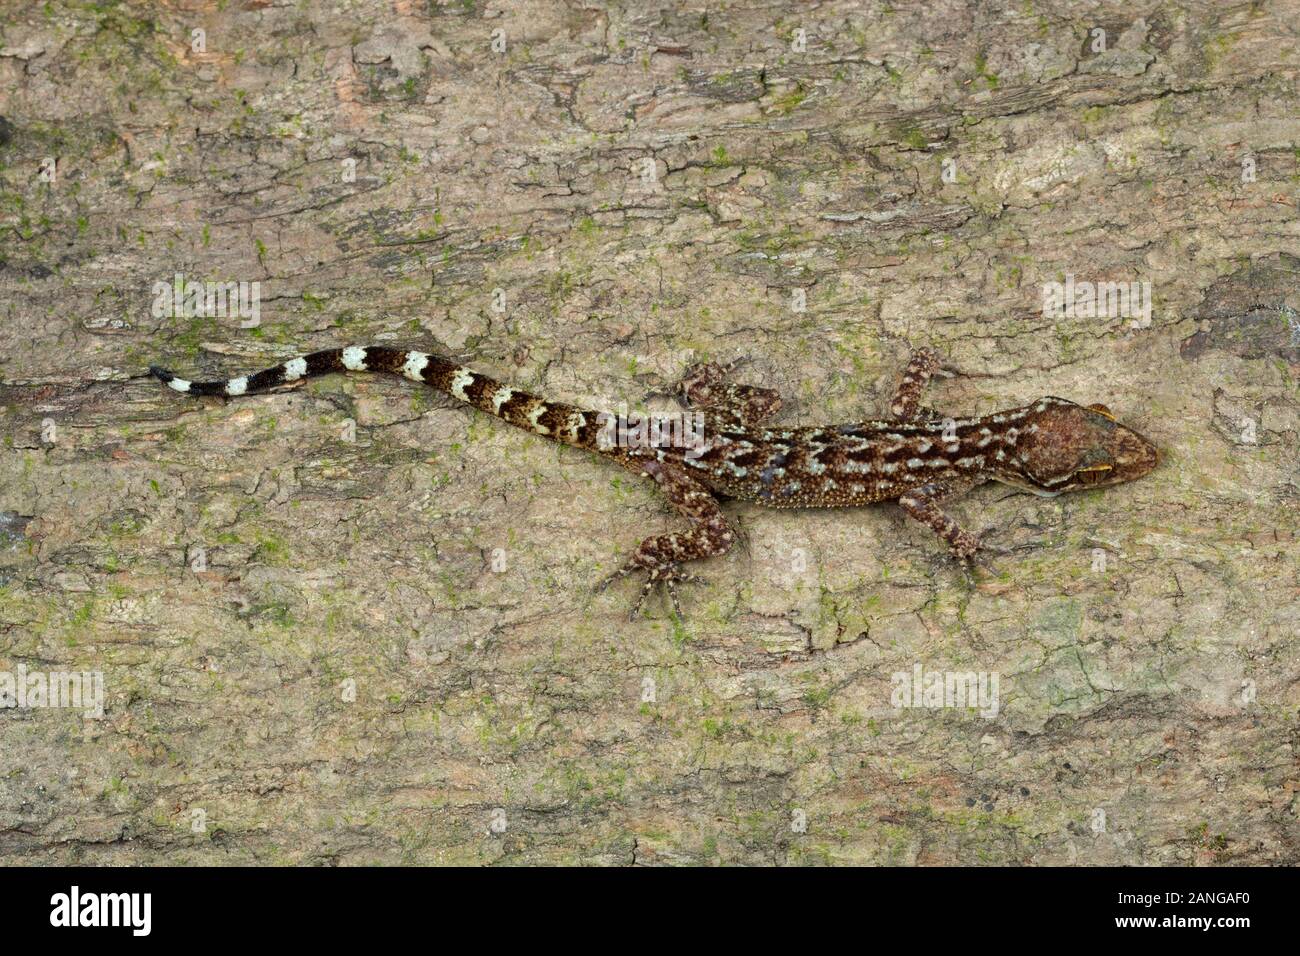 Bent toed gecko, Cyrtodactylus sp., nocturnal geckos, Himalayas, northeast India Stock Photo